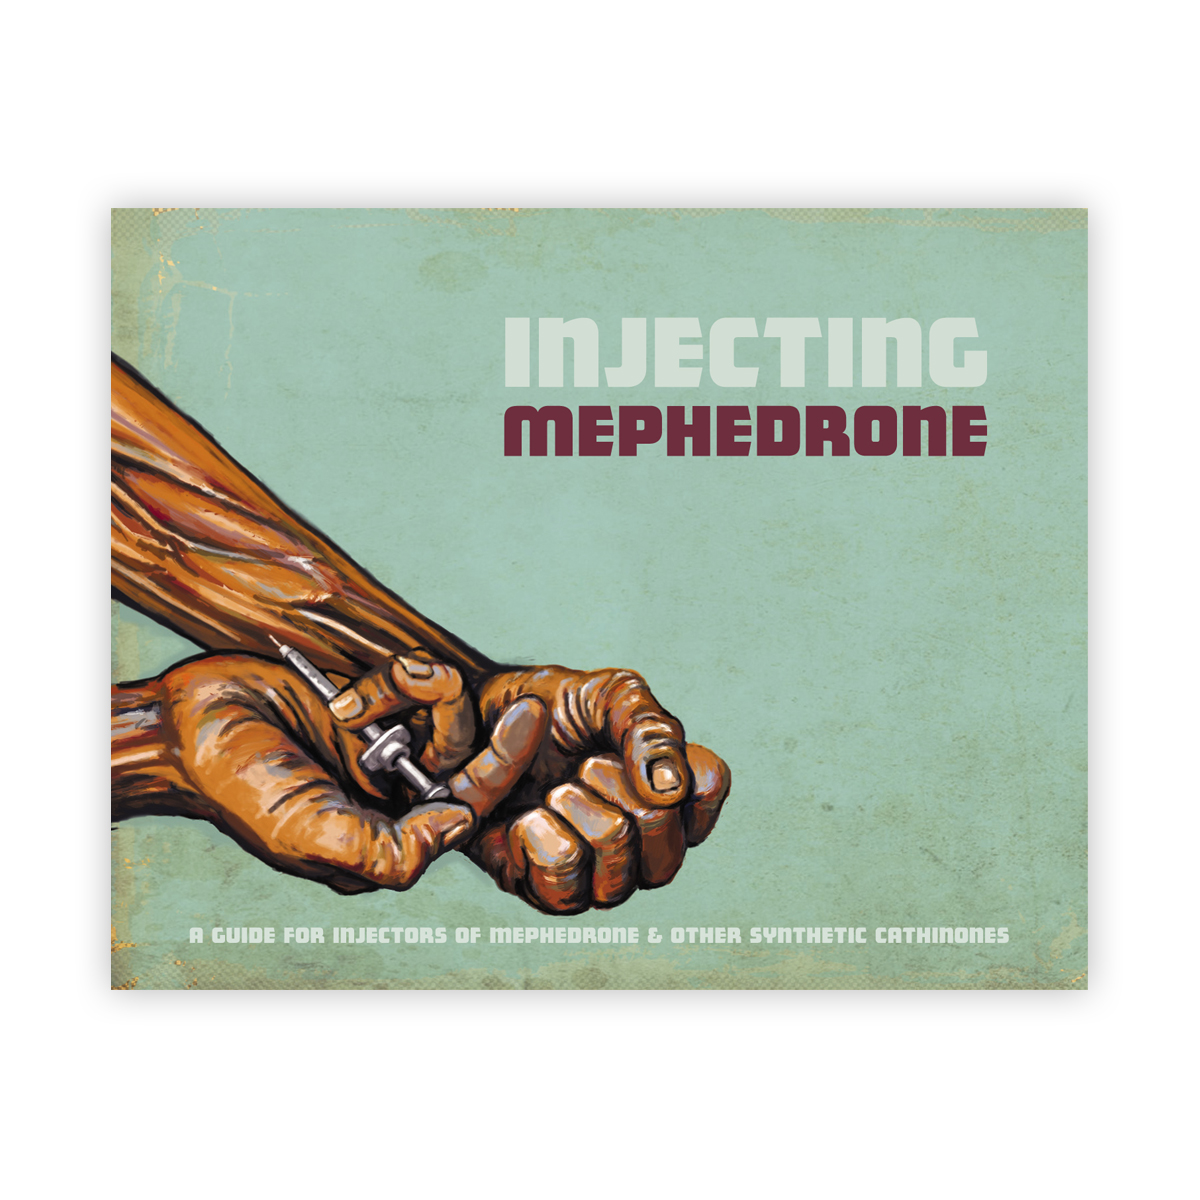 Injecting Mephedrone